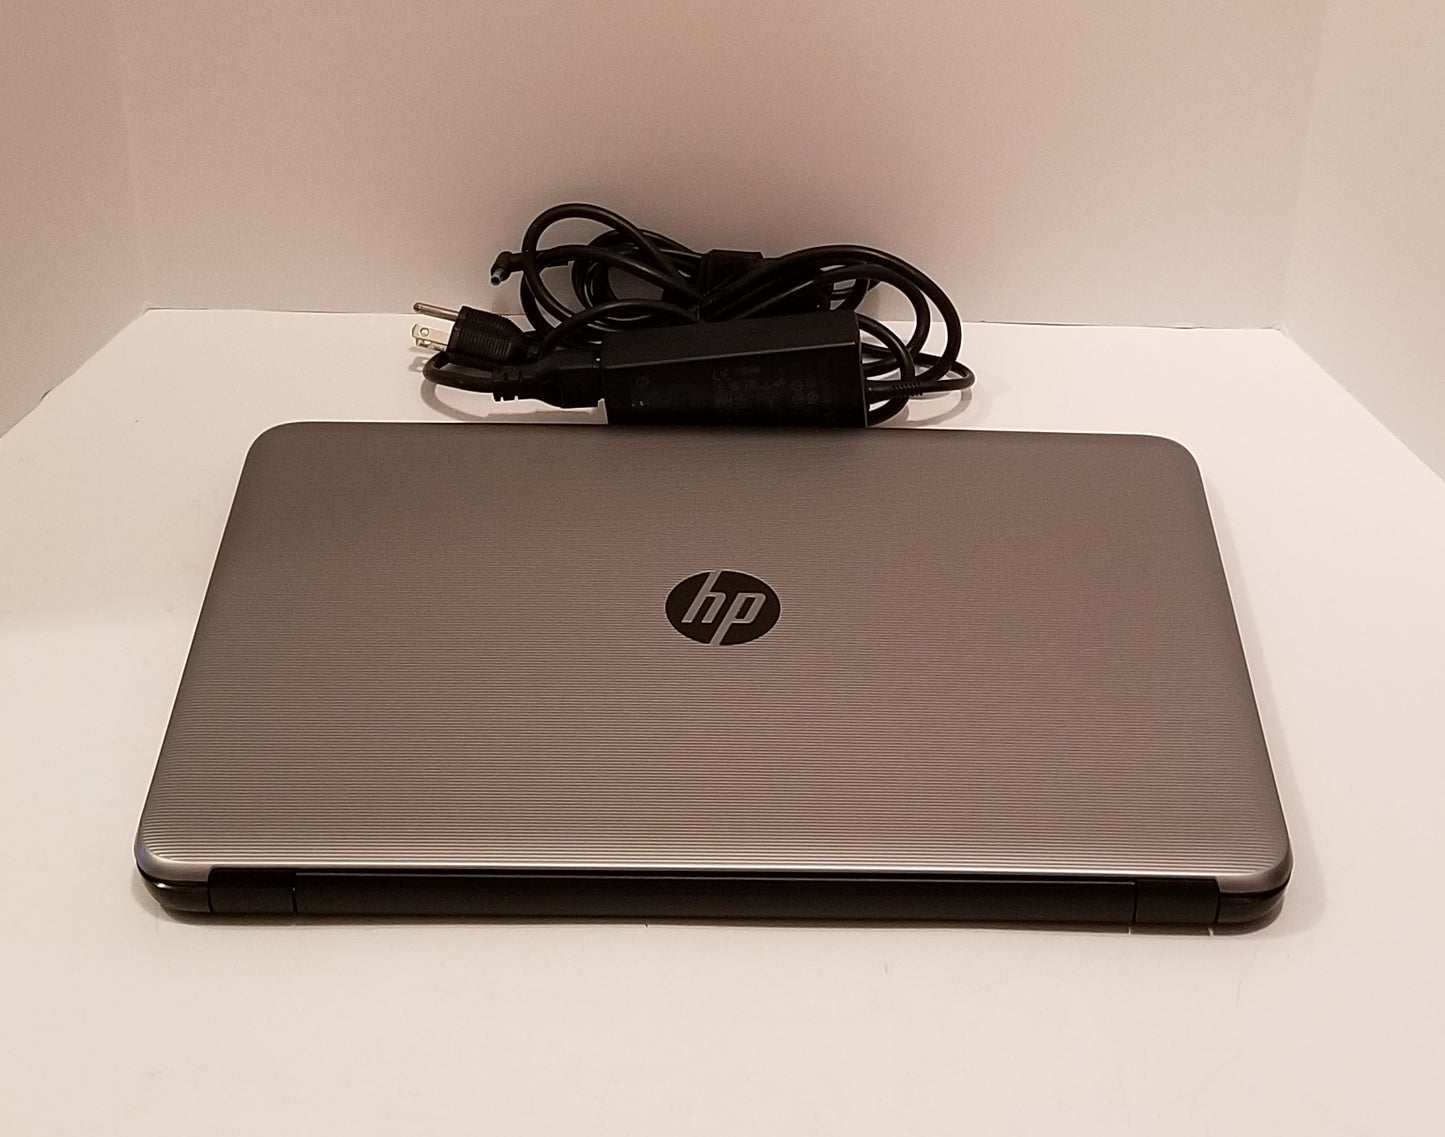 HP Notebook - AMD A10-9600P / Windows 10 Home - Rekes Sales